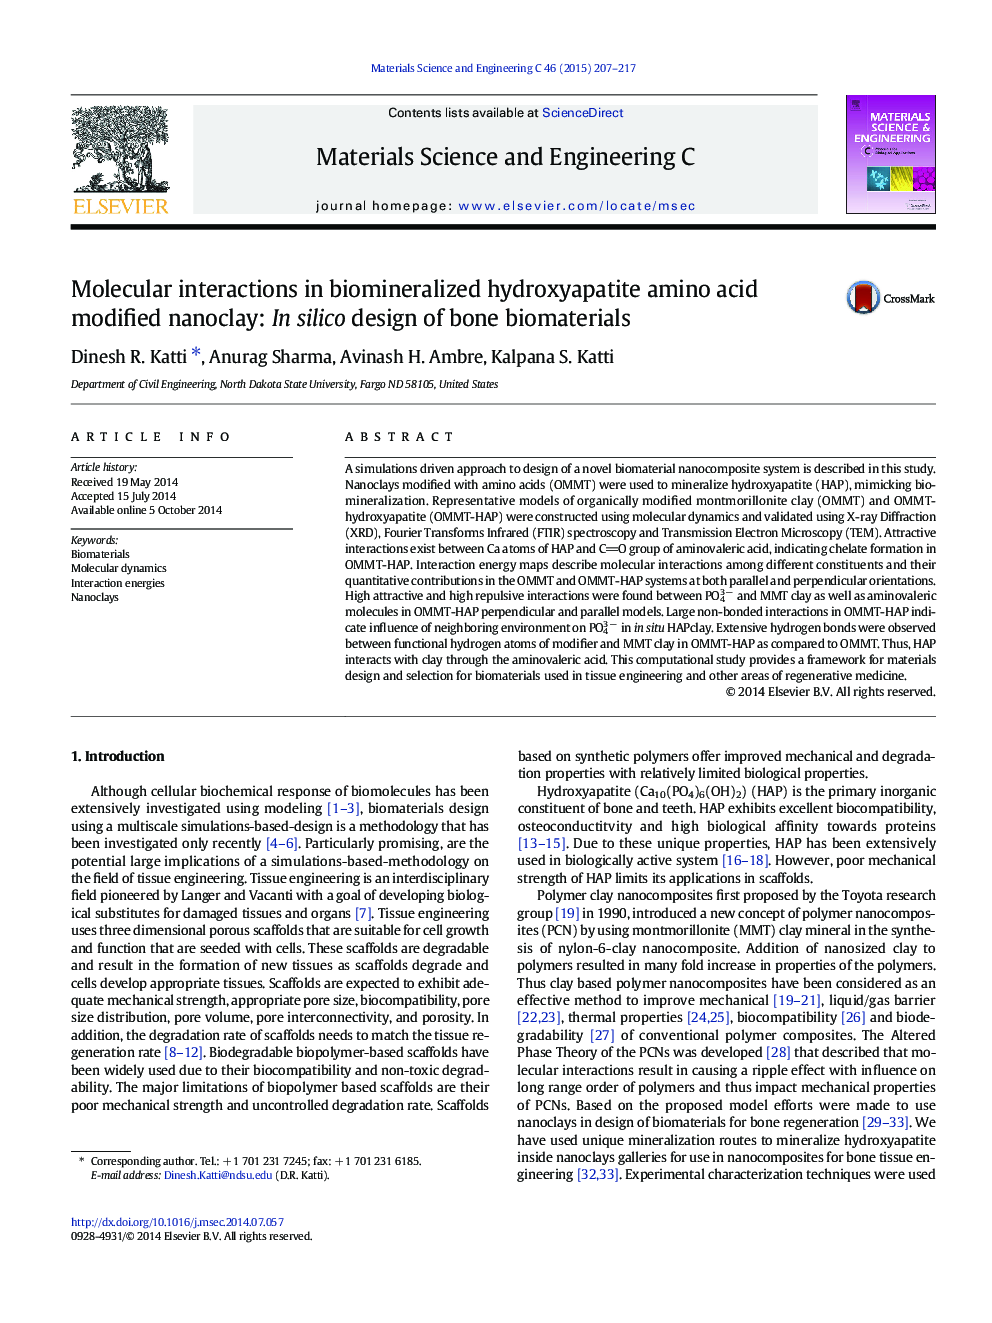 Molecular interactions in biomineralized hydroxyapatite amino acid modified nanoclay: In silico design of bone biomaterials